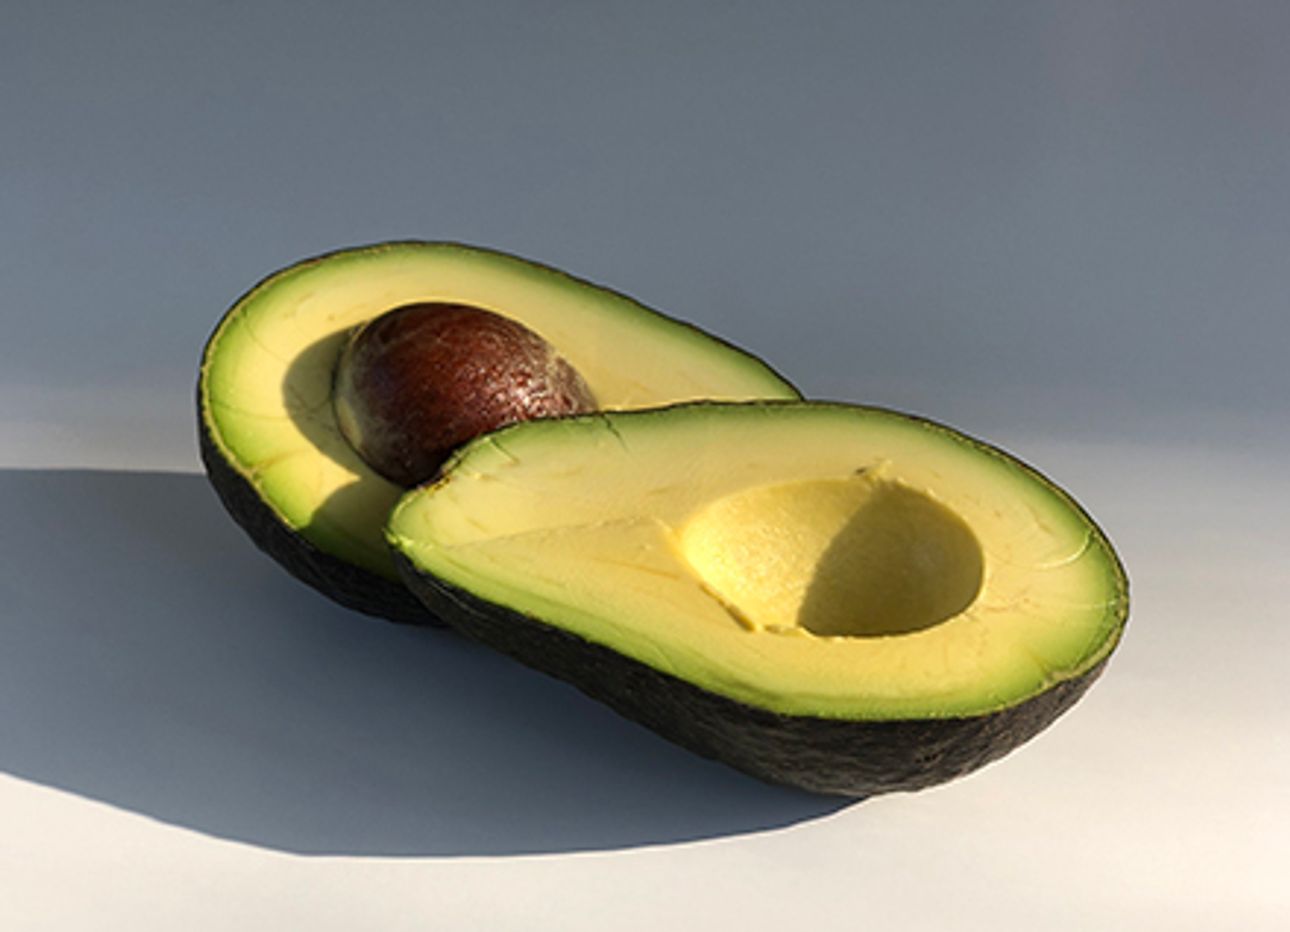 A split avocado in bright, moody lighting.